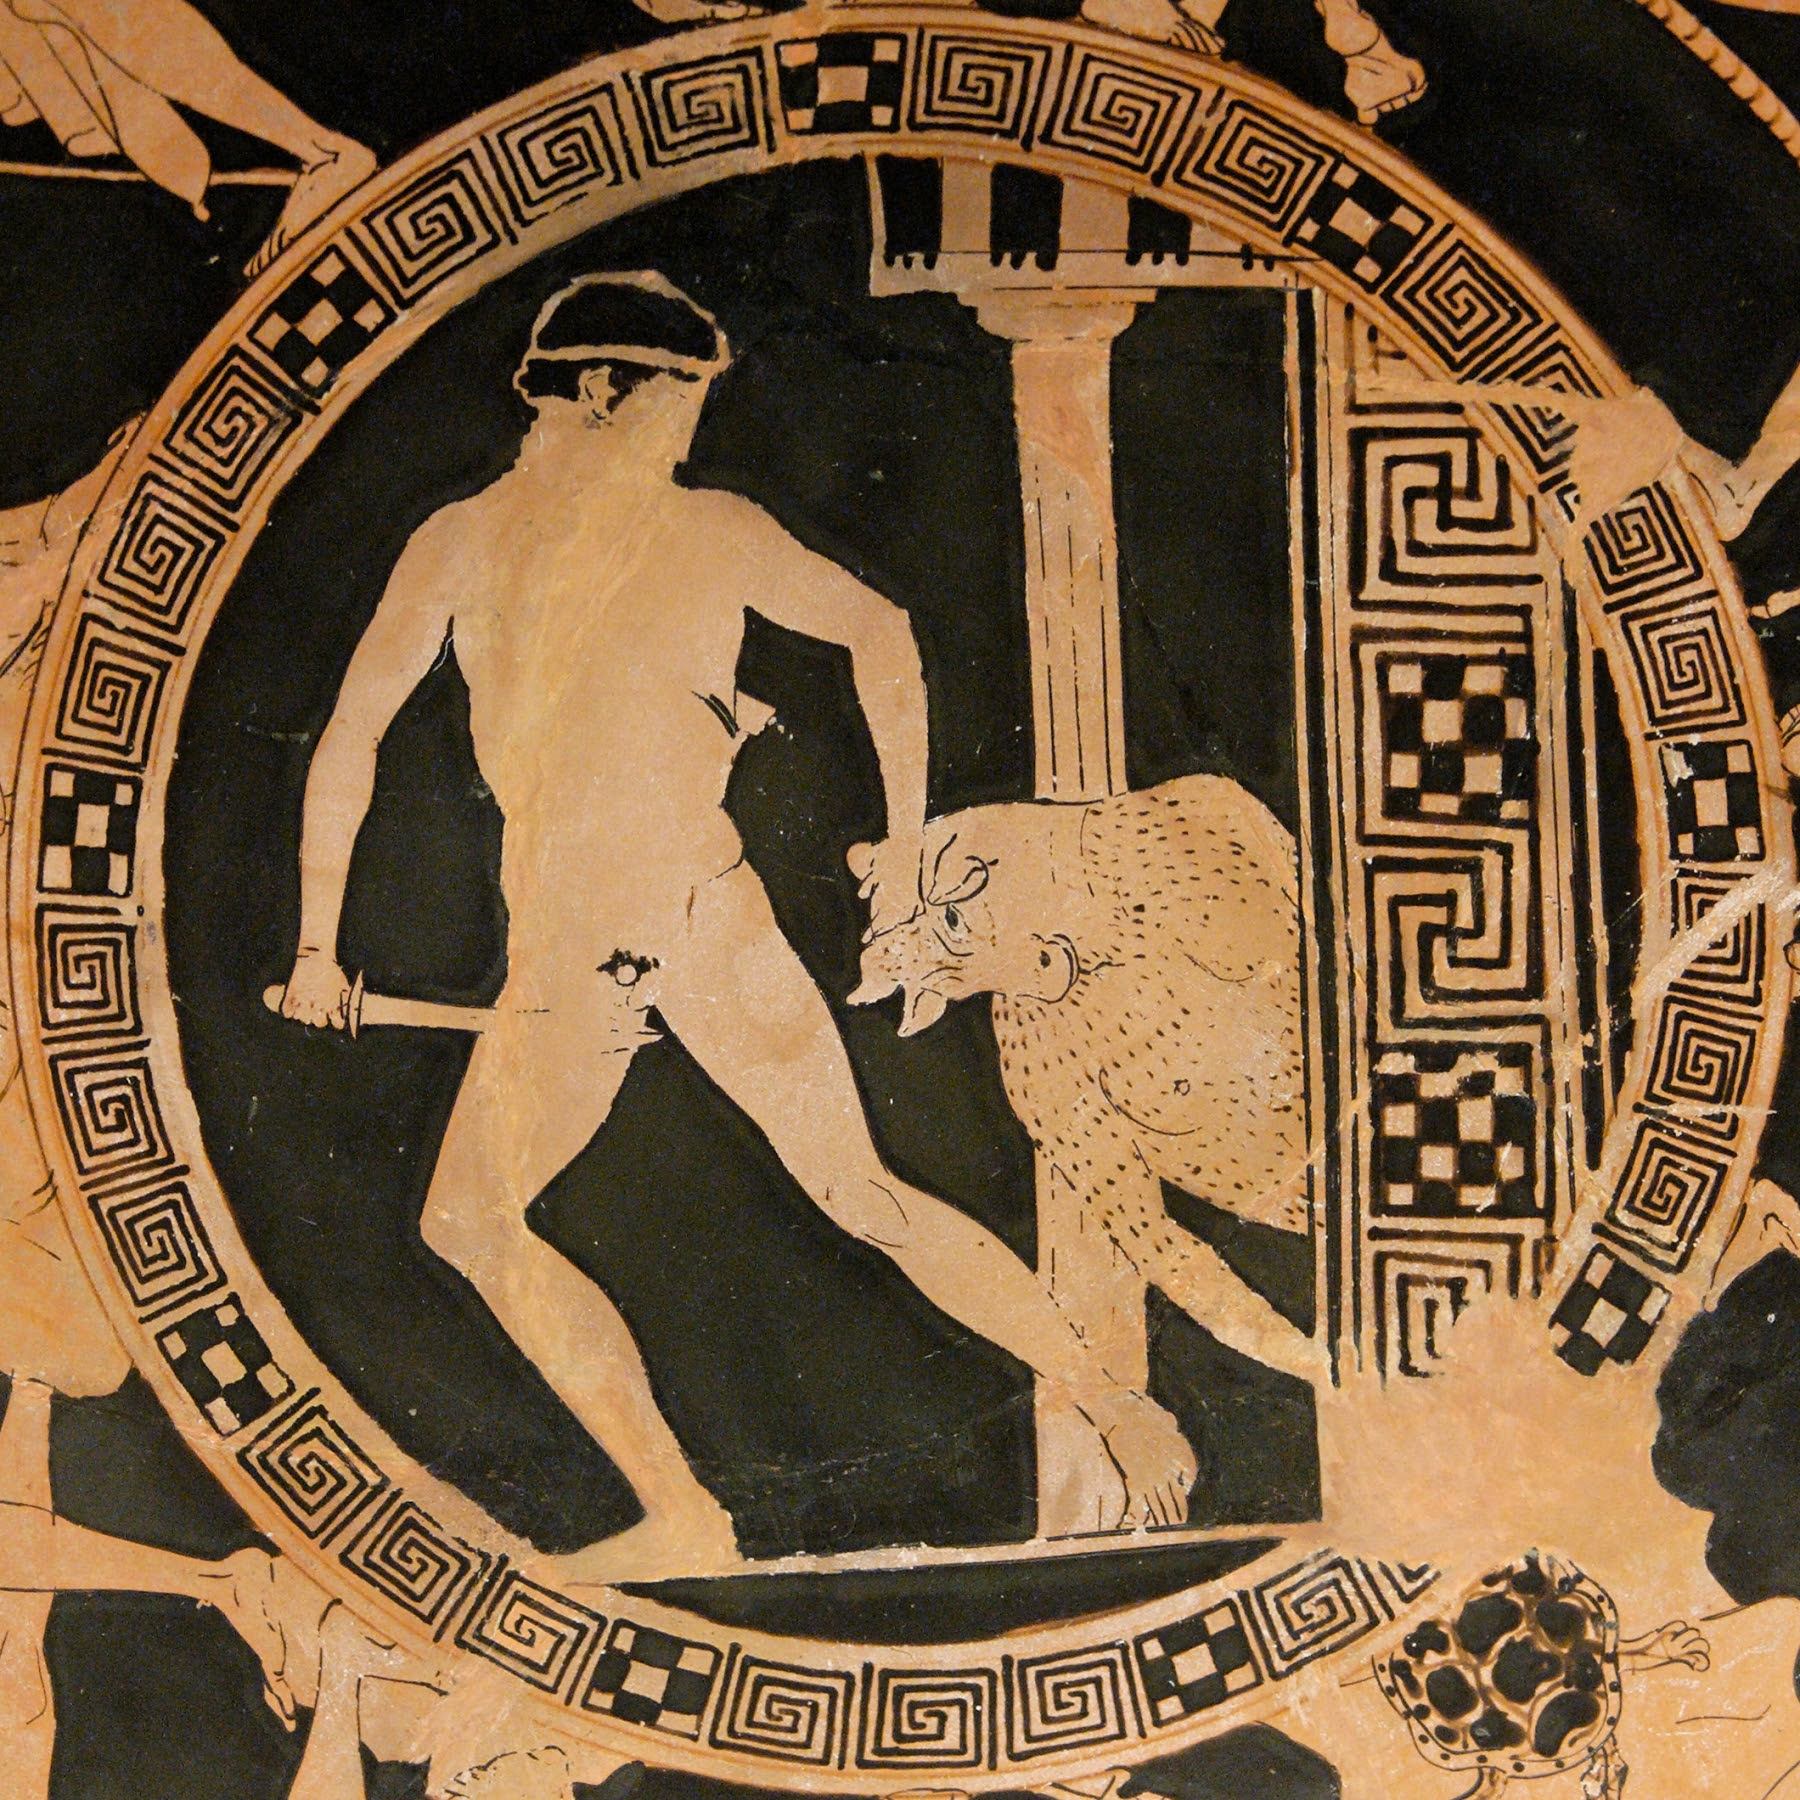 http://upload.wikimedia.org/wikipedia/commons/d/d6/Theseus_Minotaur_BM_Vase_E84.jpg